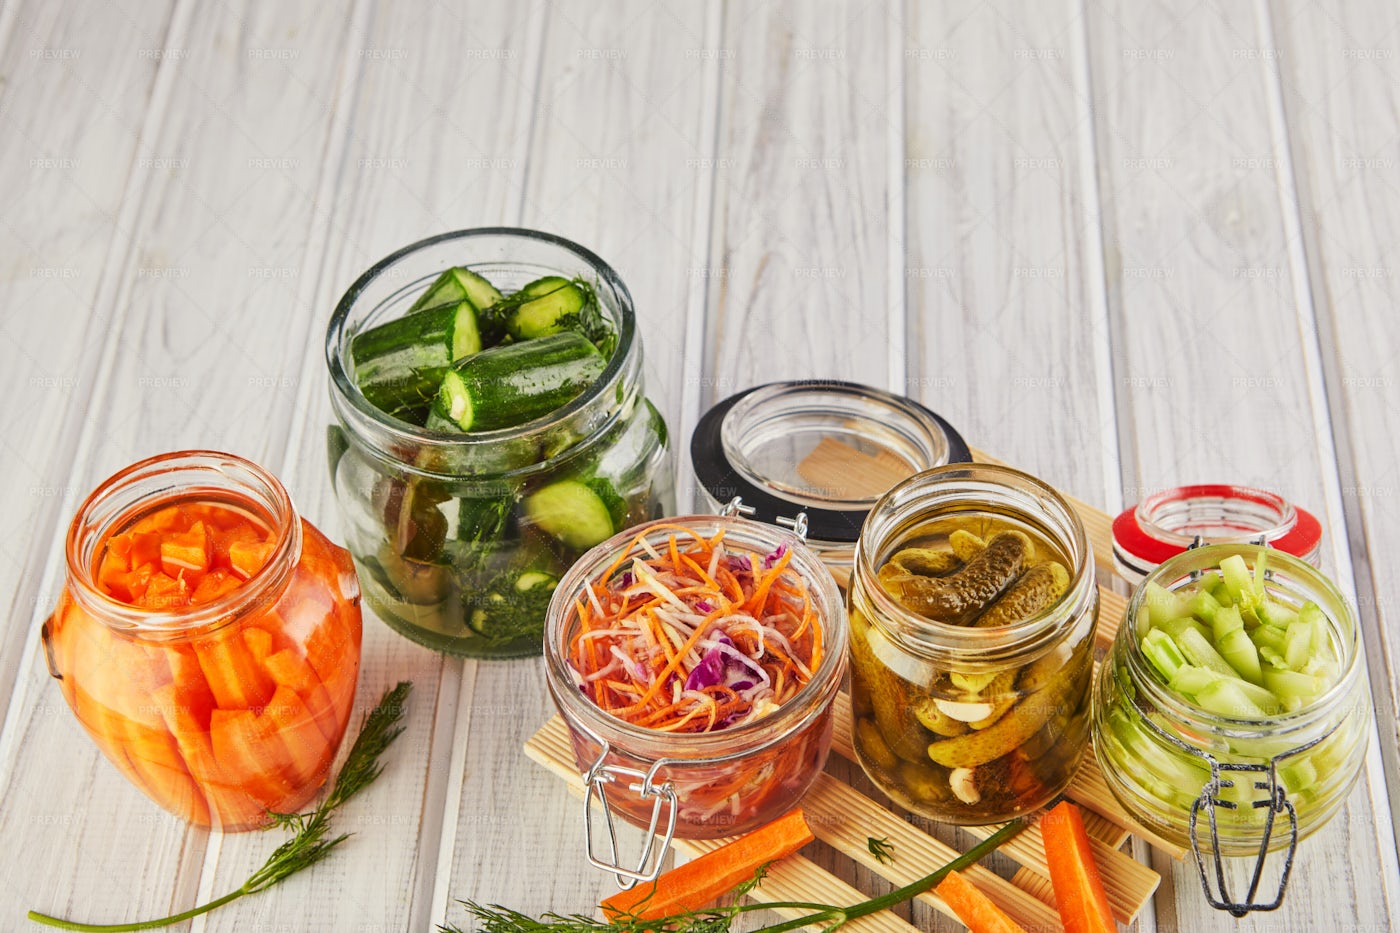 Vegetarian Food In Jars: Stock Photos